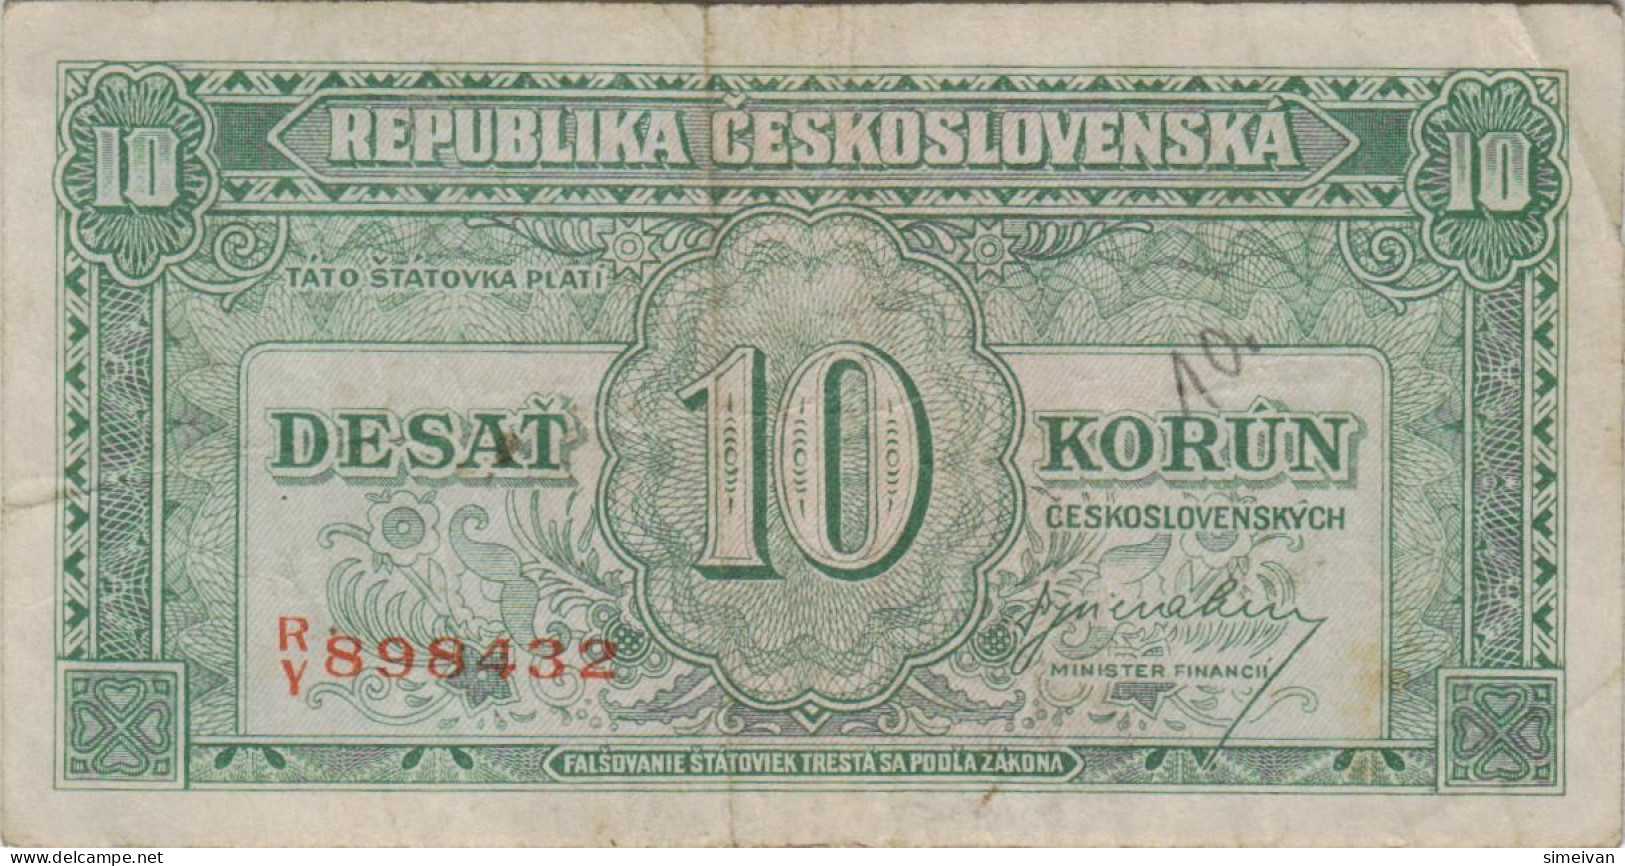 Czechoslovakia 10 Korun ND (1945) P-60a Banknote Europe Currency Tchécoslovaquie Tschechoslowakei #5227 - Tschechoslowakei